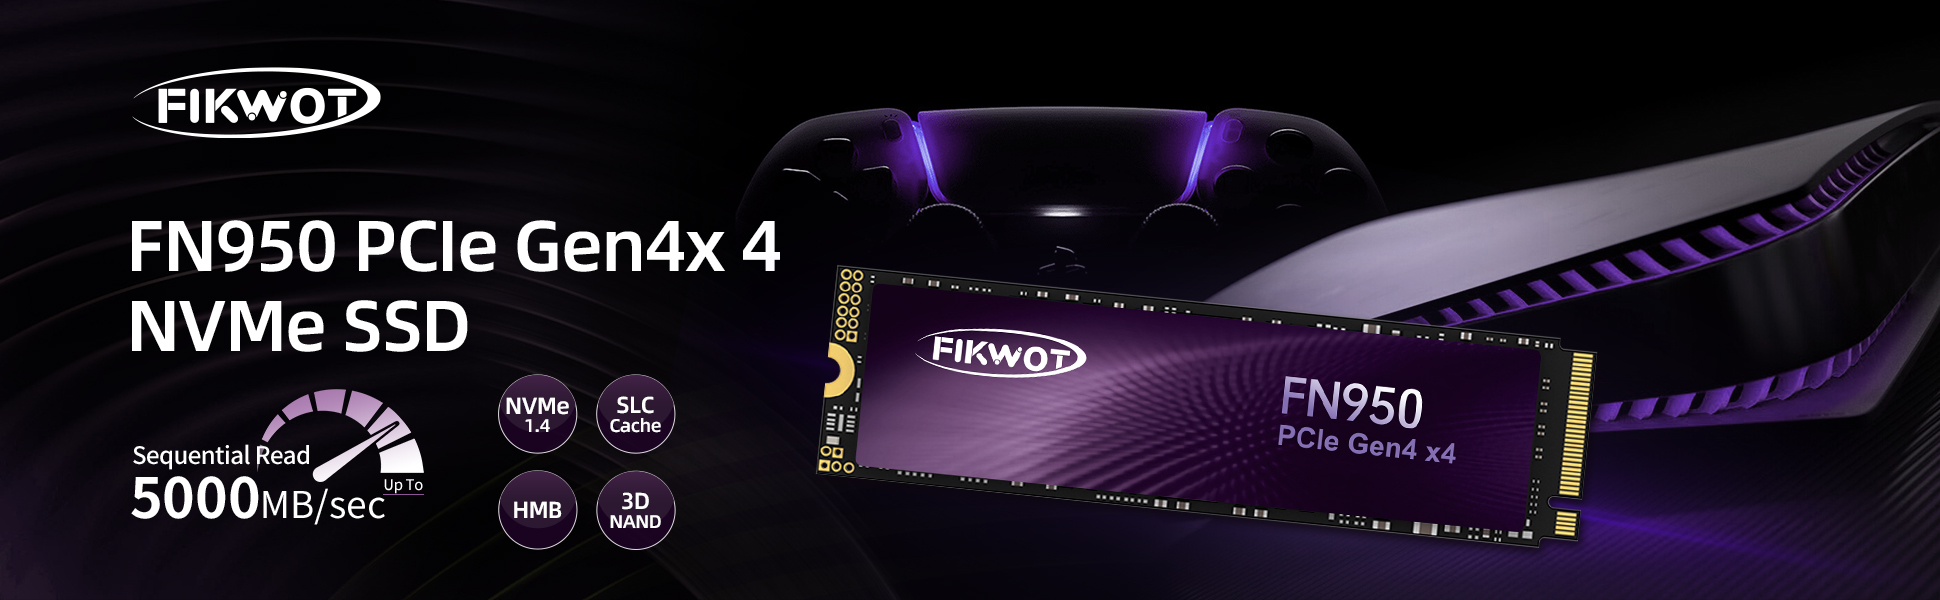 Fikwot FN950 M.2 2280 SSD PCIe Gen4 x4